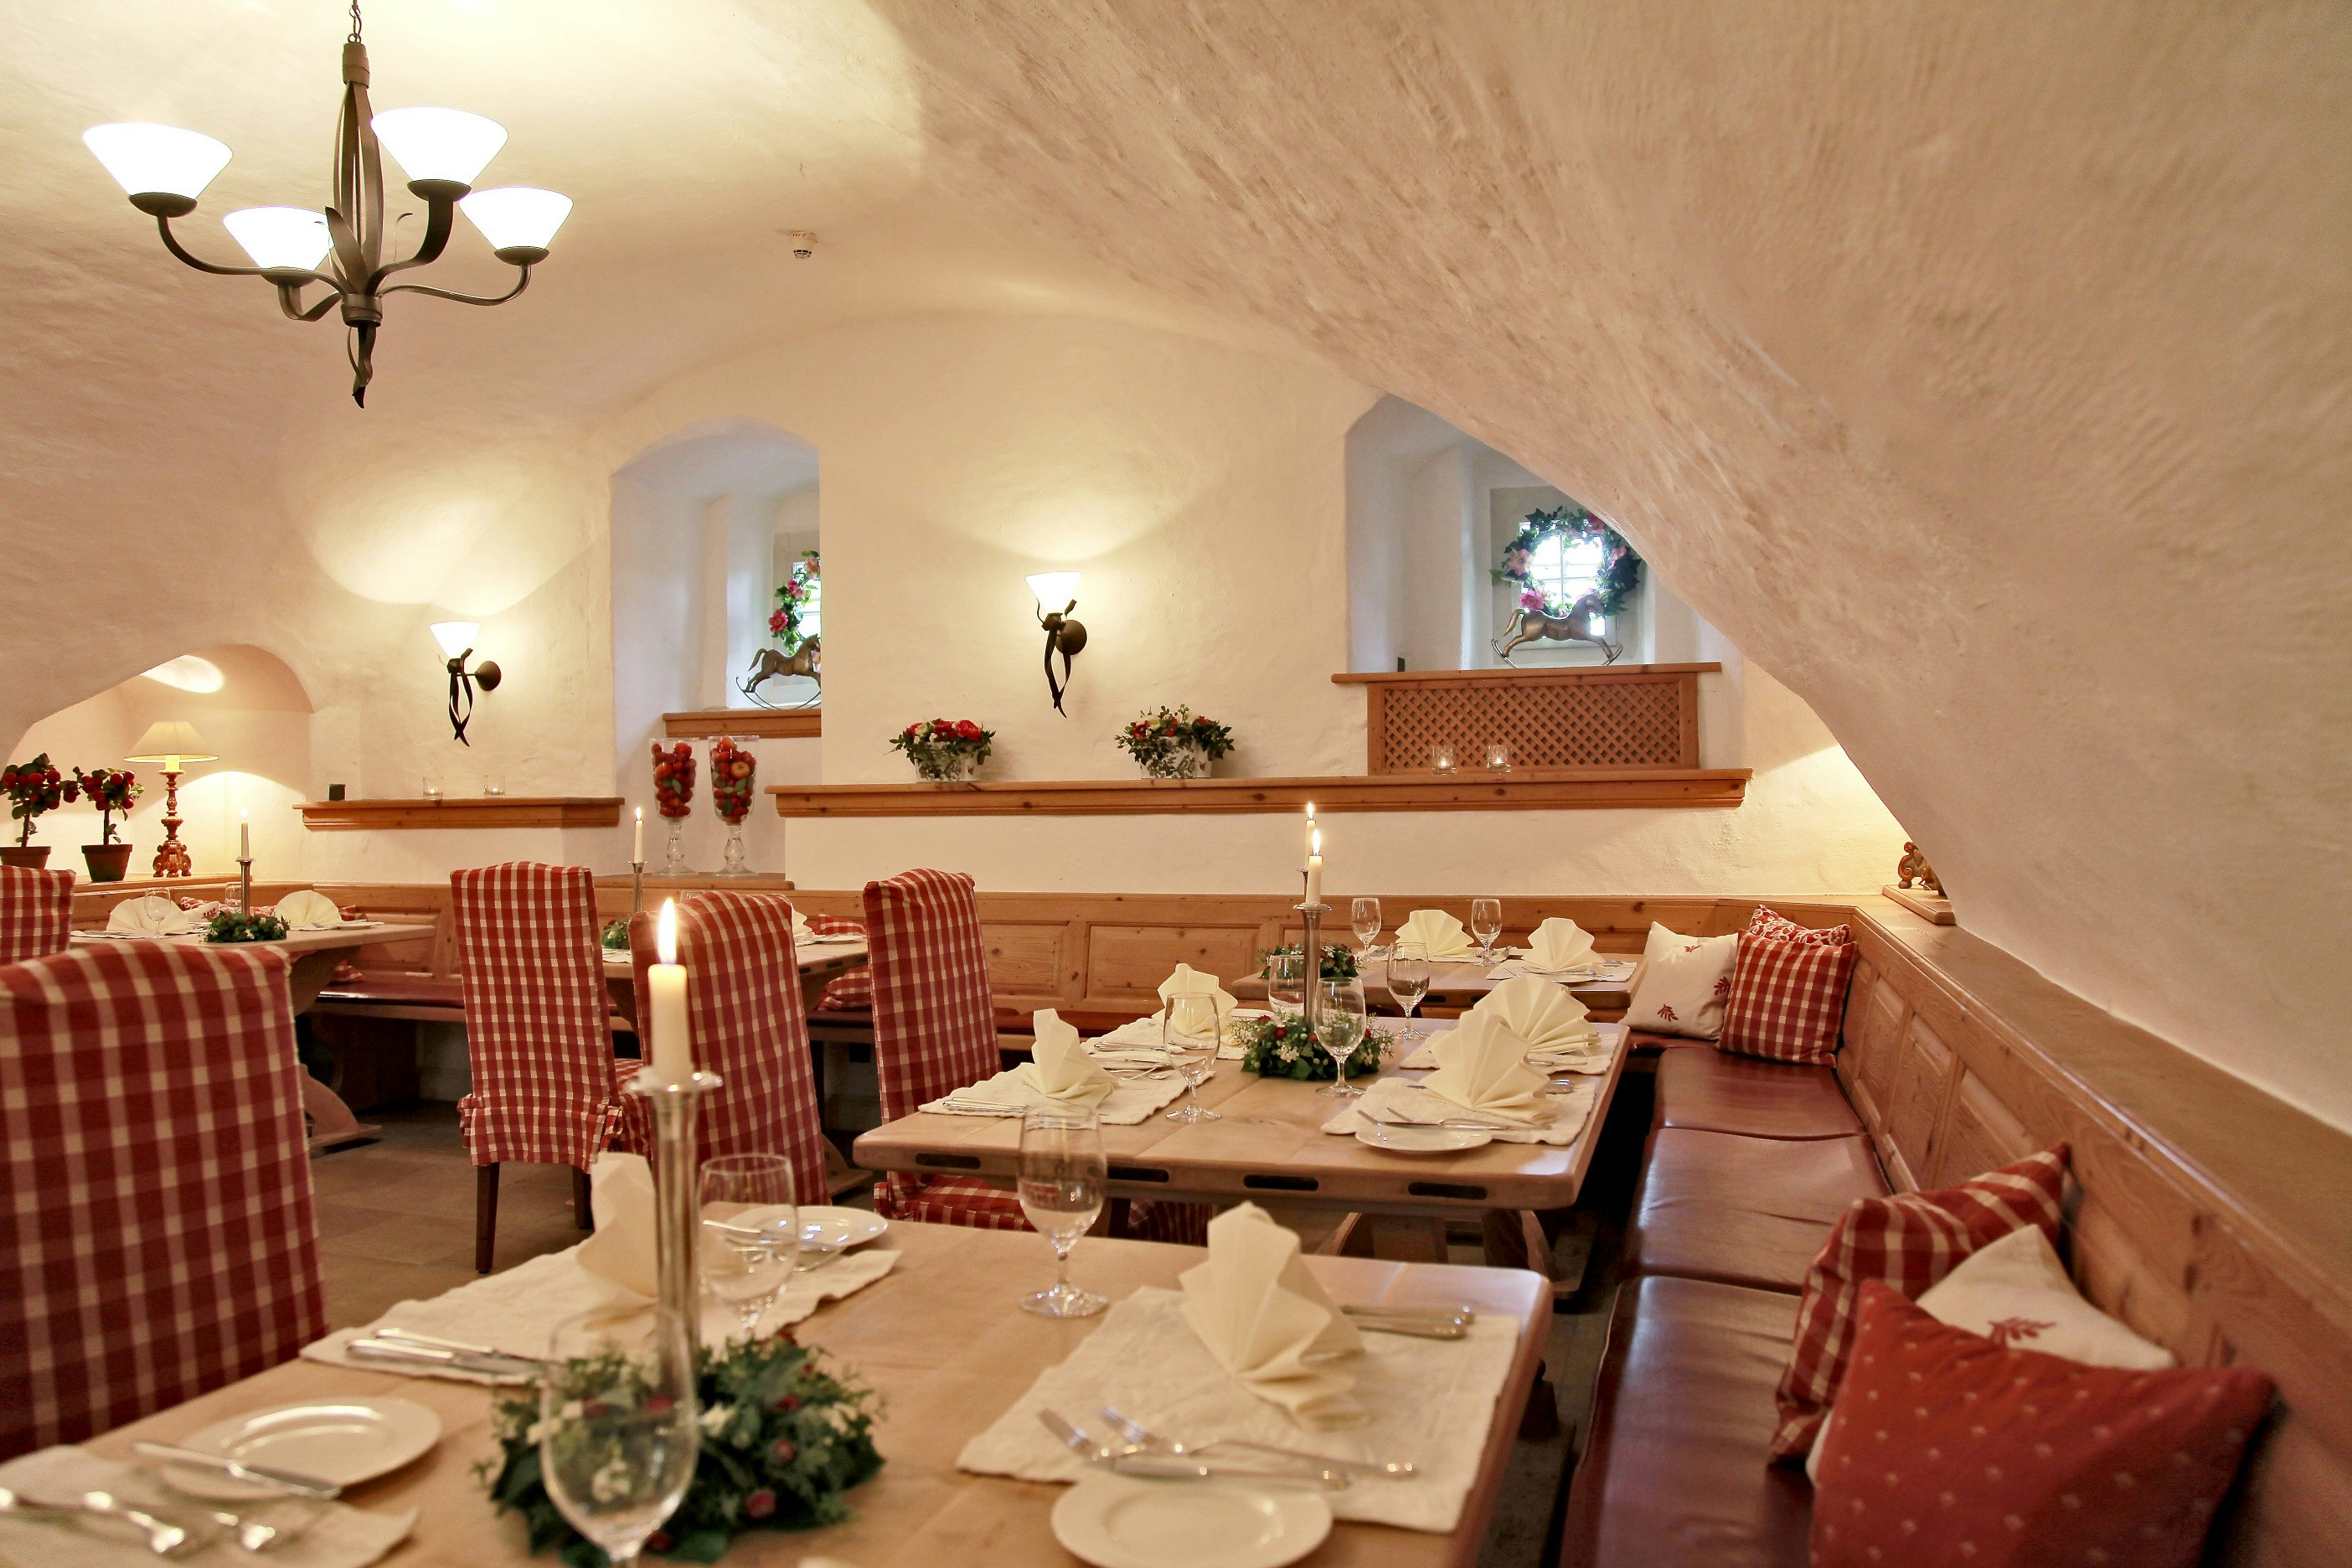 Menü im Restaurant Schlosskeller